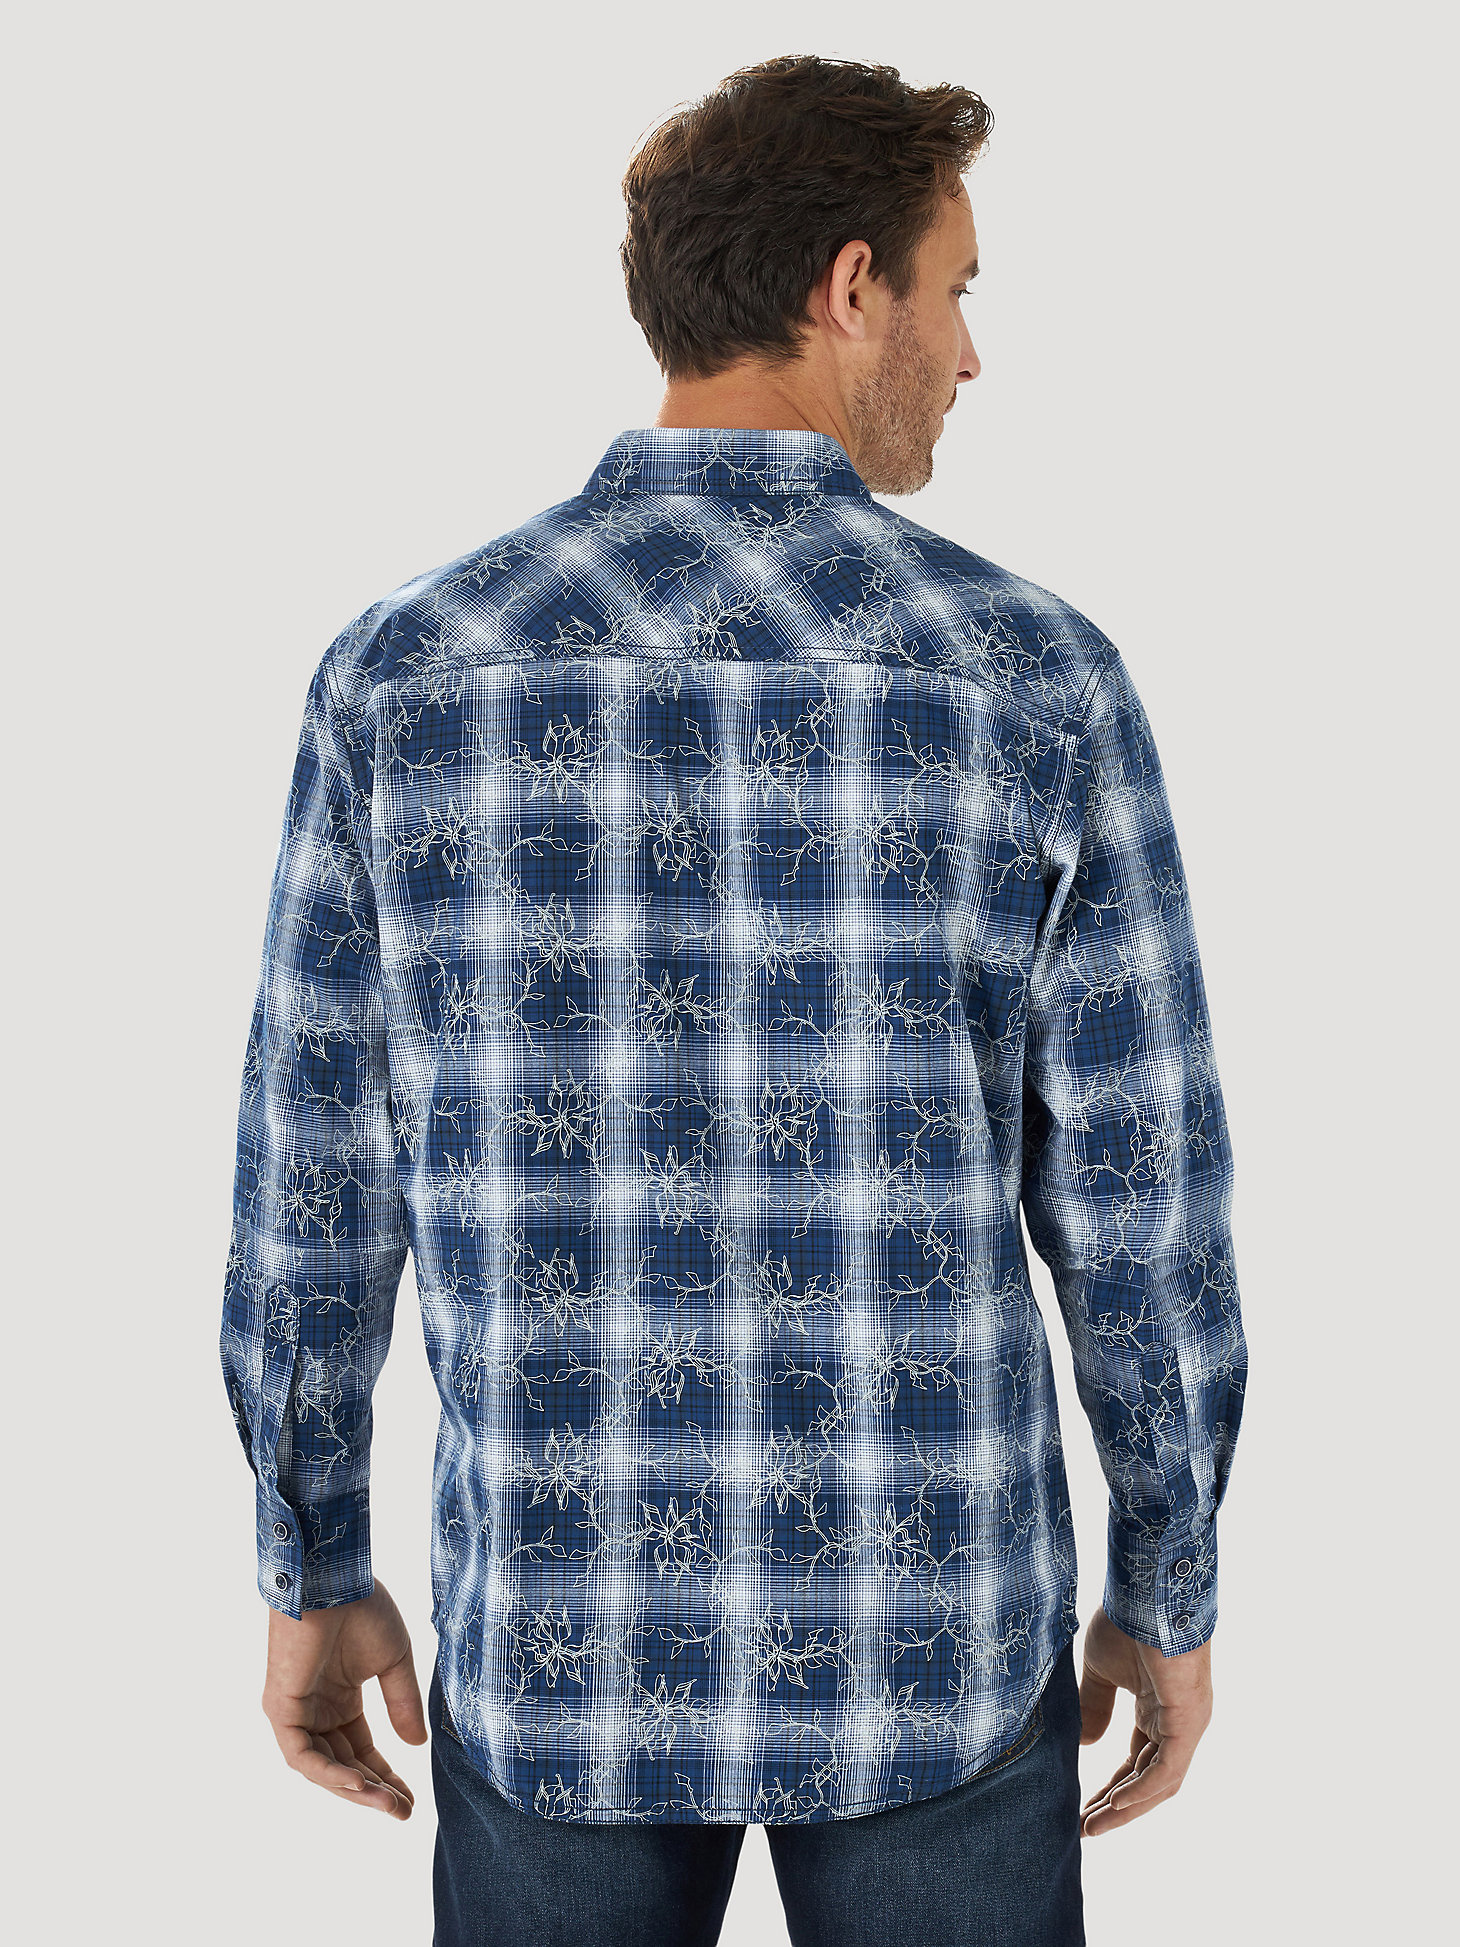 Men's Wrangler Retro® Long Sleeve Button-Down Print Shirt in Grey/White alternative view 1